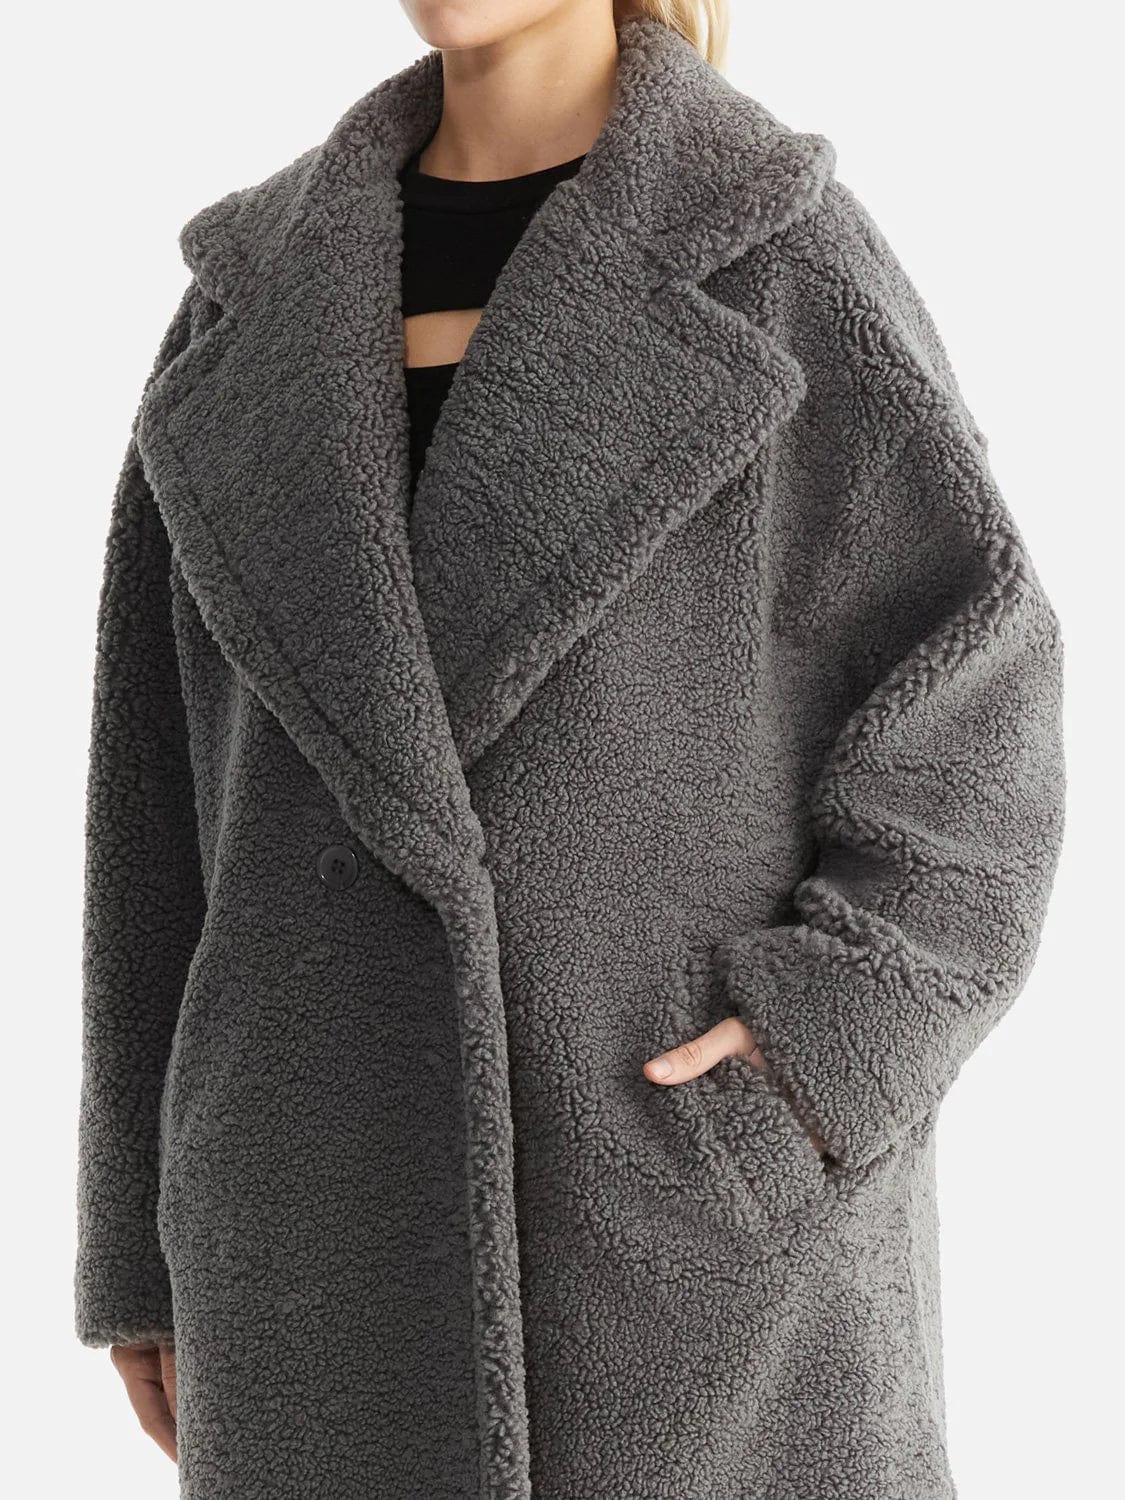 Ena Pelly Jackets - Fur/Shearing Ena Pelly | Evan Fux Fur Jacket - Charcoal